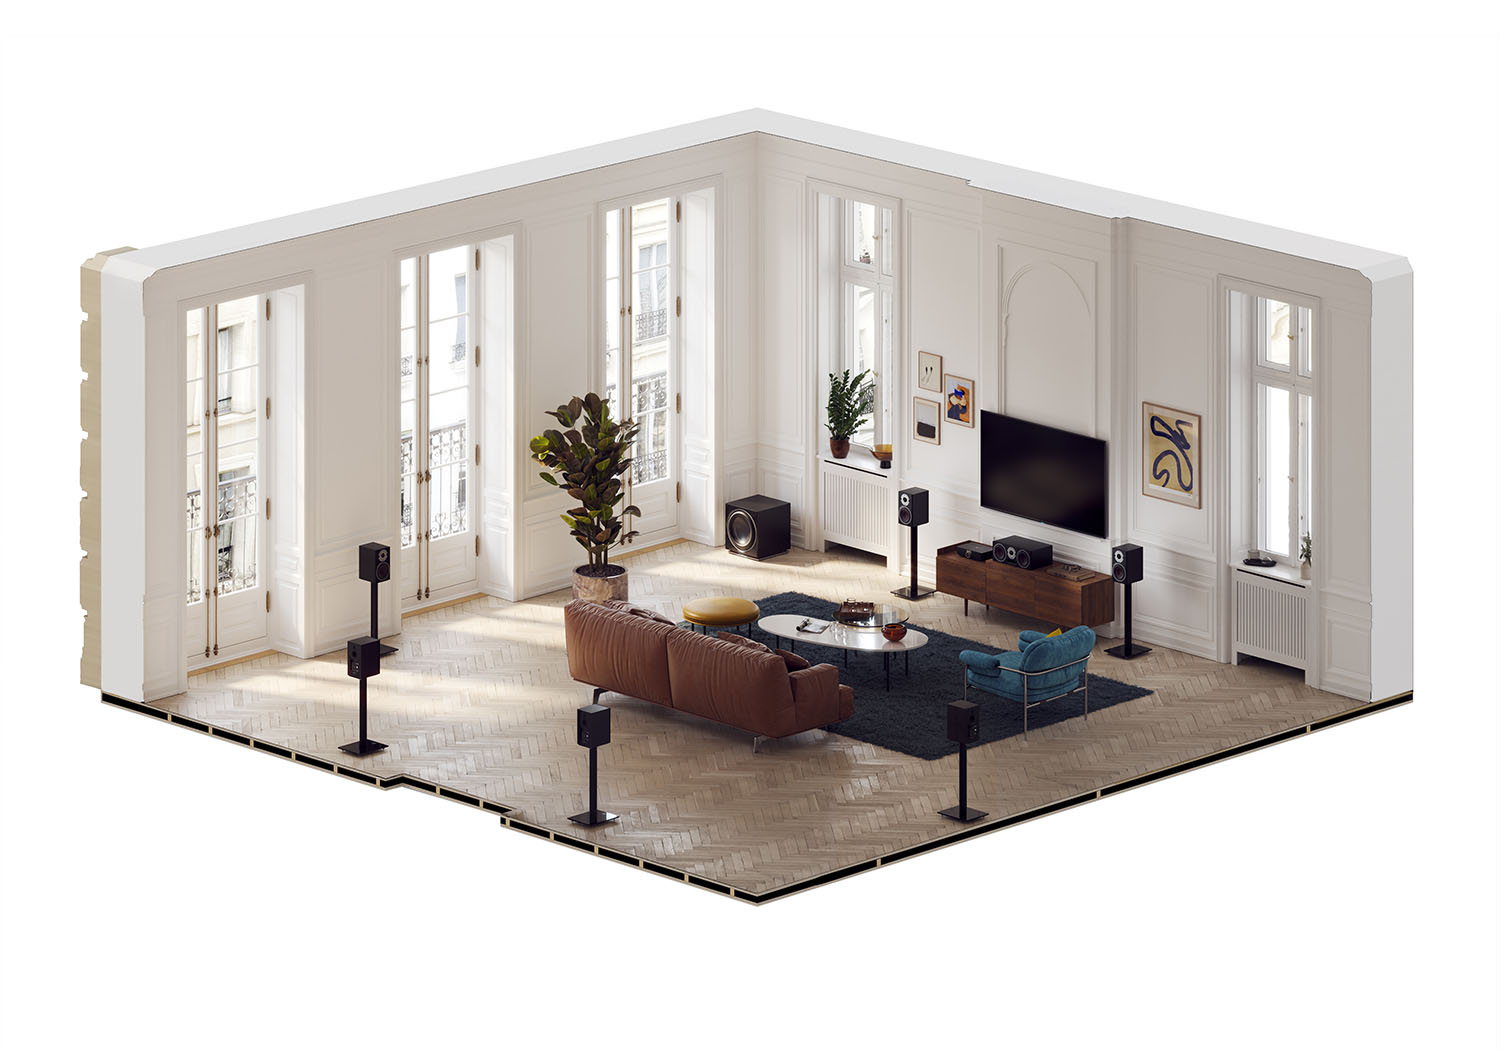 Isometric view of large floor plan